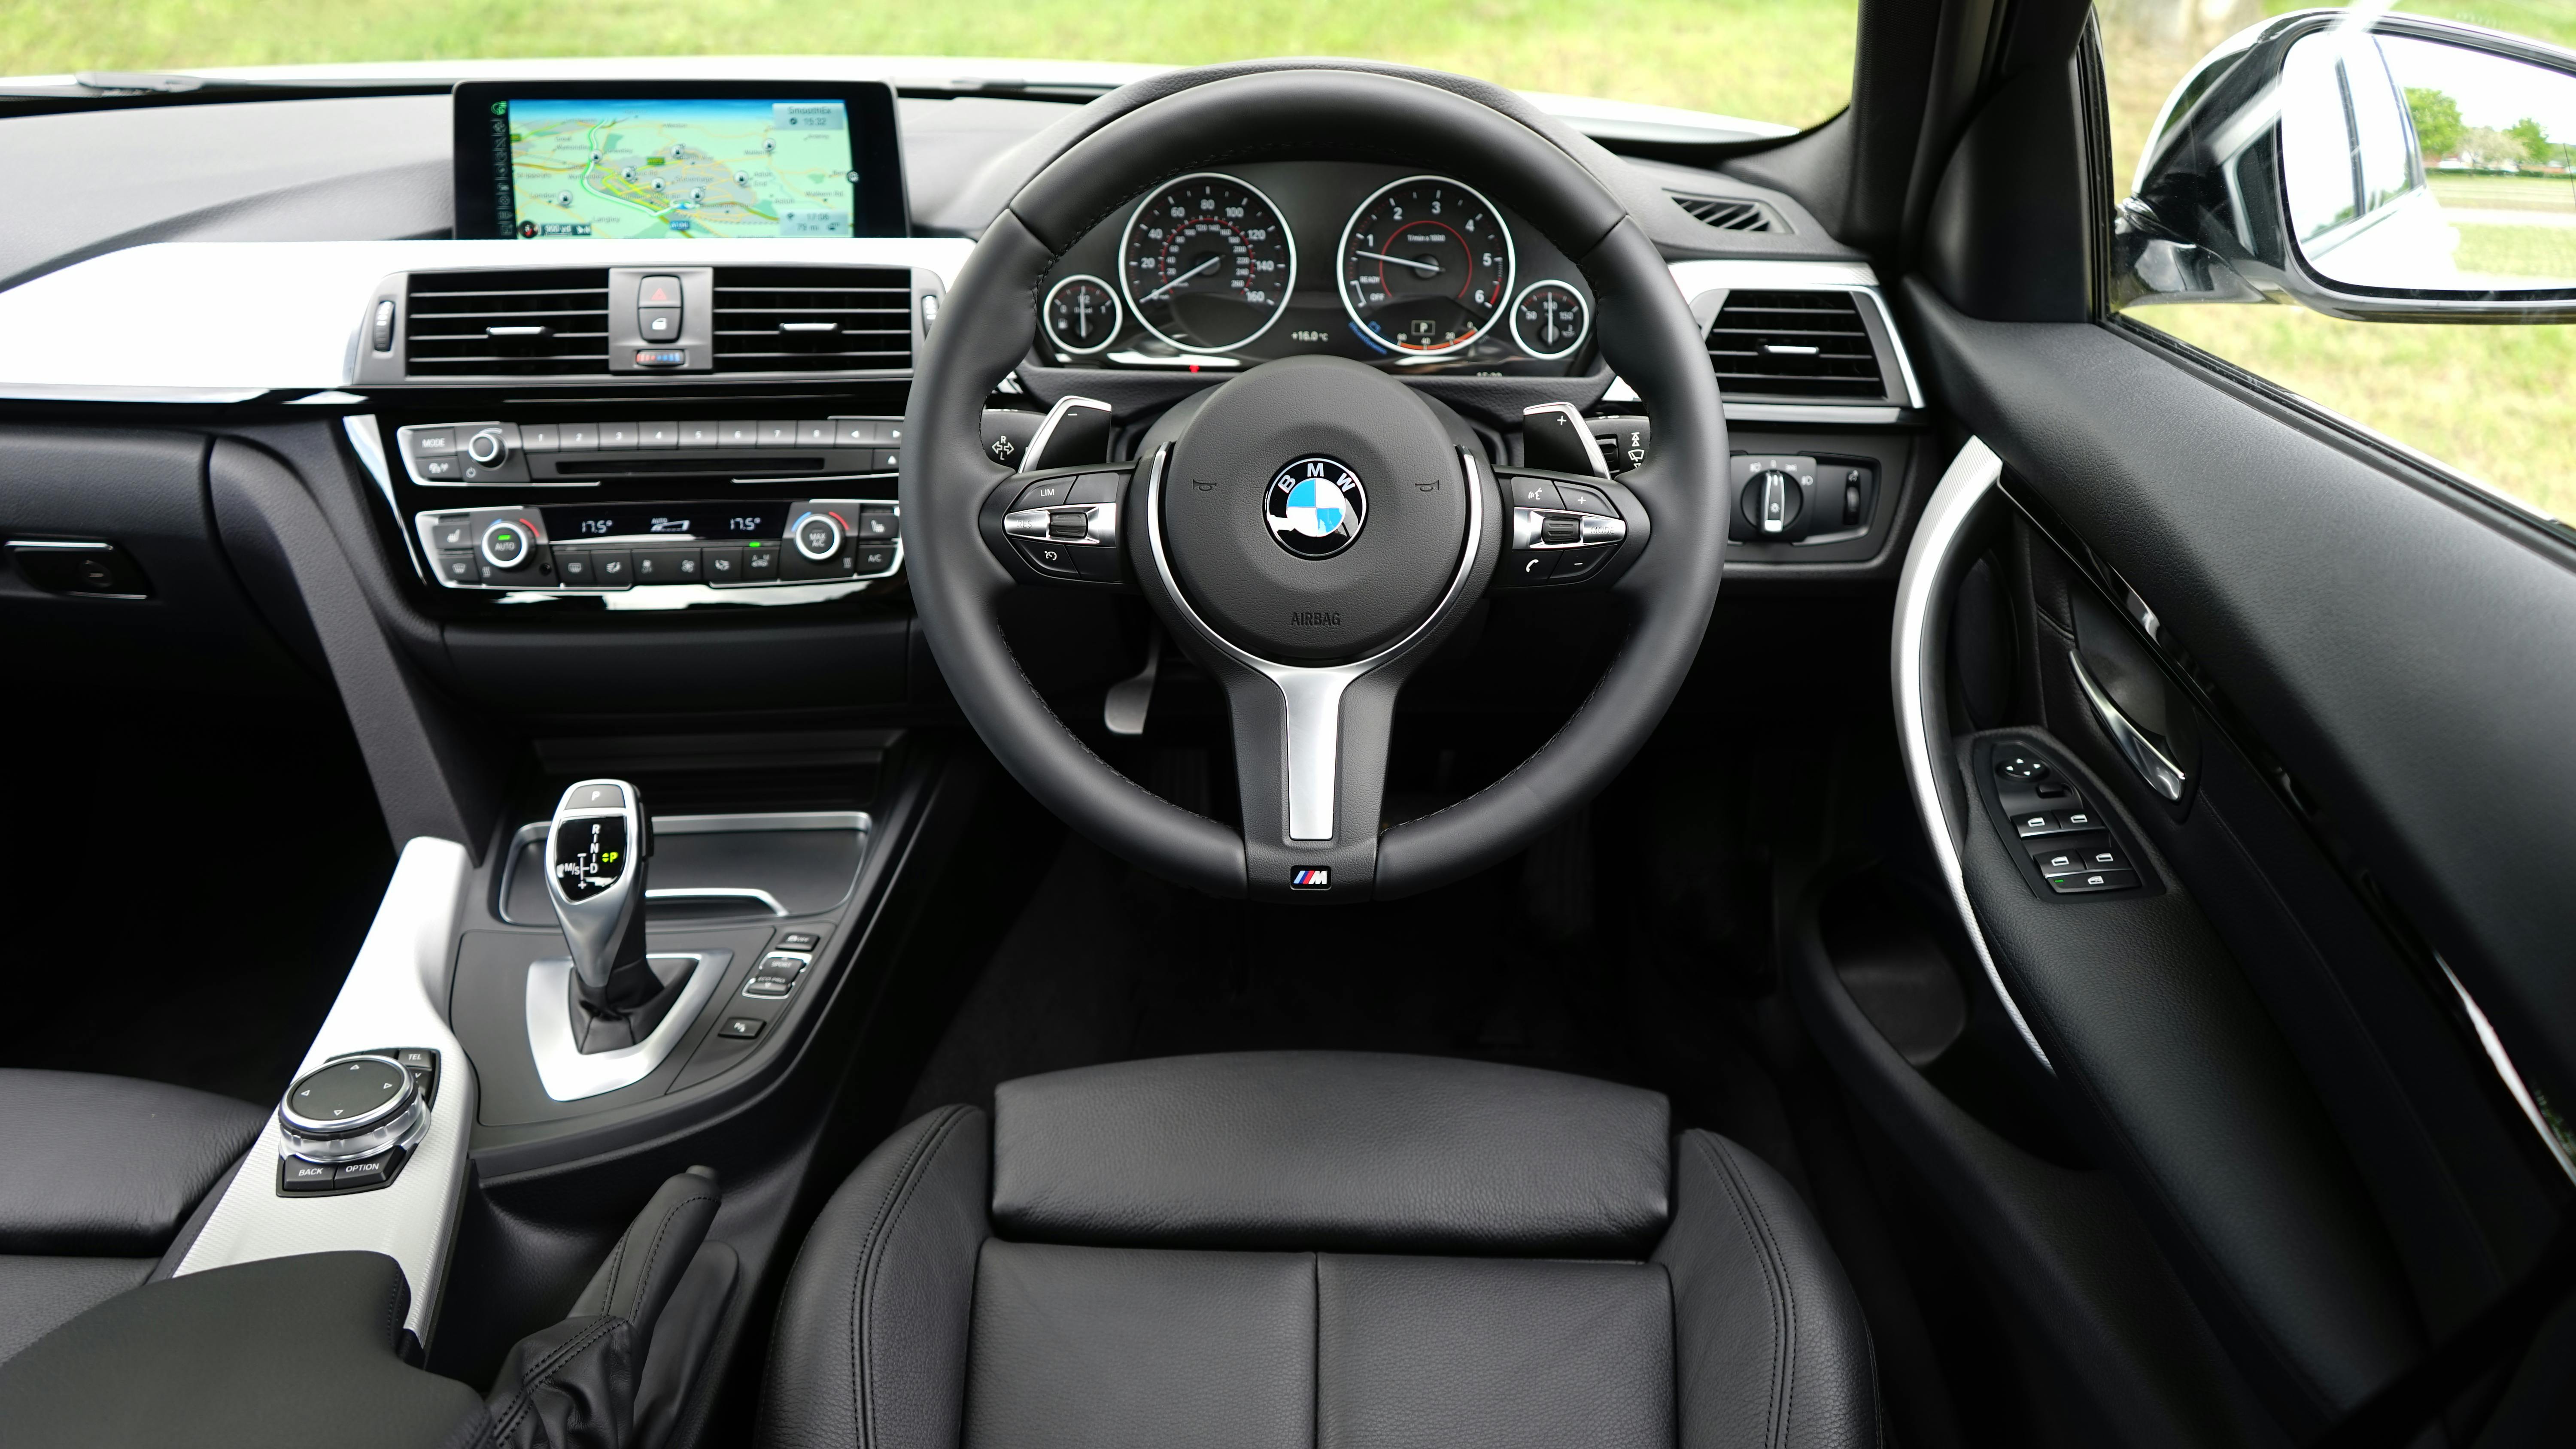 Car Interior Photos, Download The BEST Free Car Interior Stock